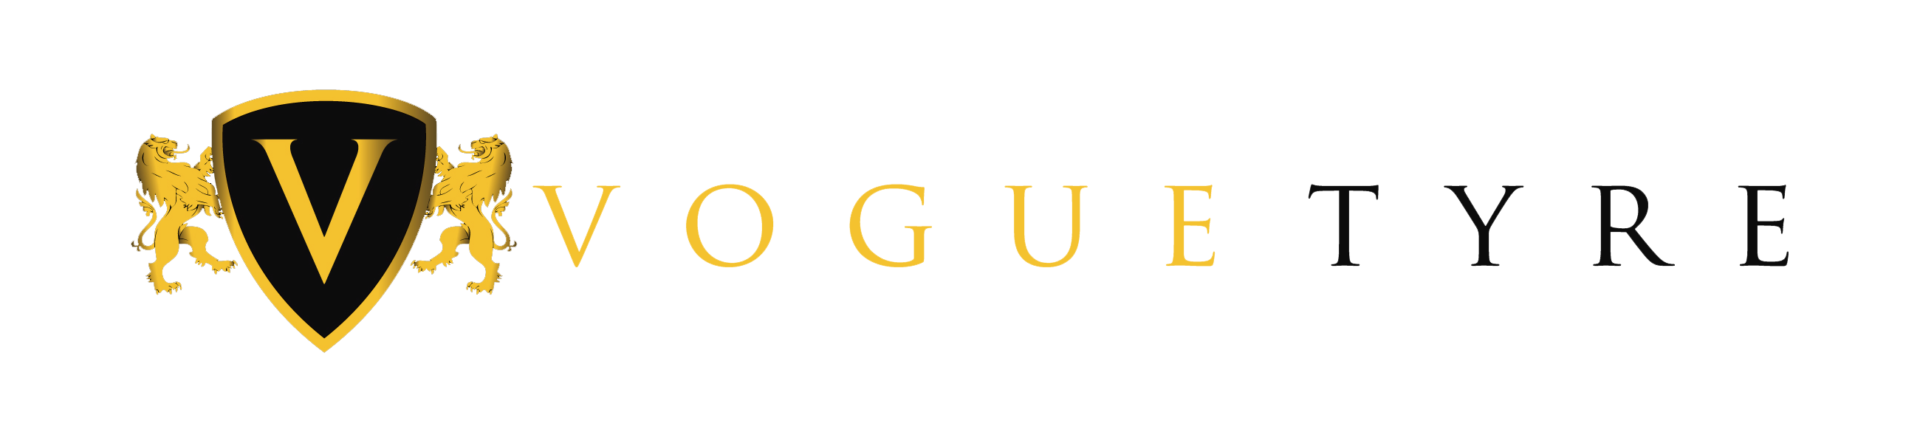 Vogue-Tyre-logo-2600x600